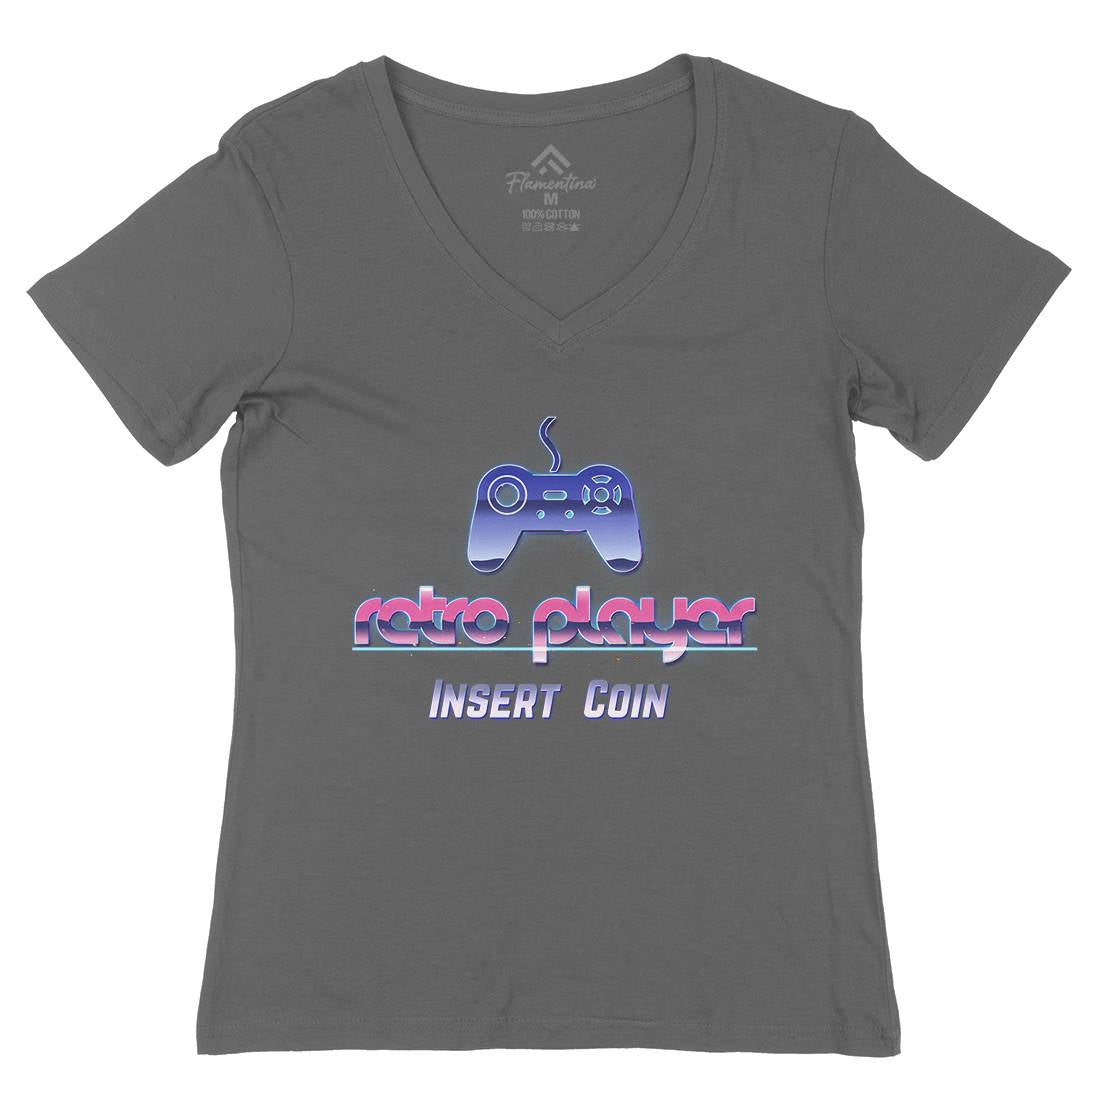 Retro Player Womens Organic V-Neck T-Shirt Geek B998